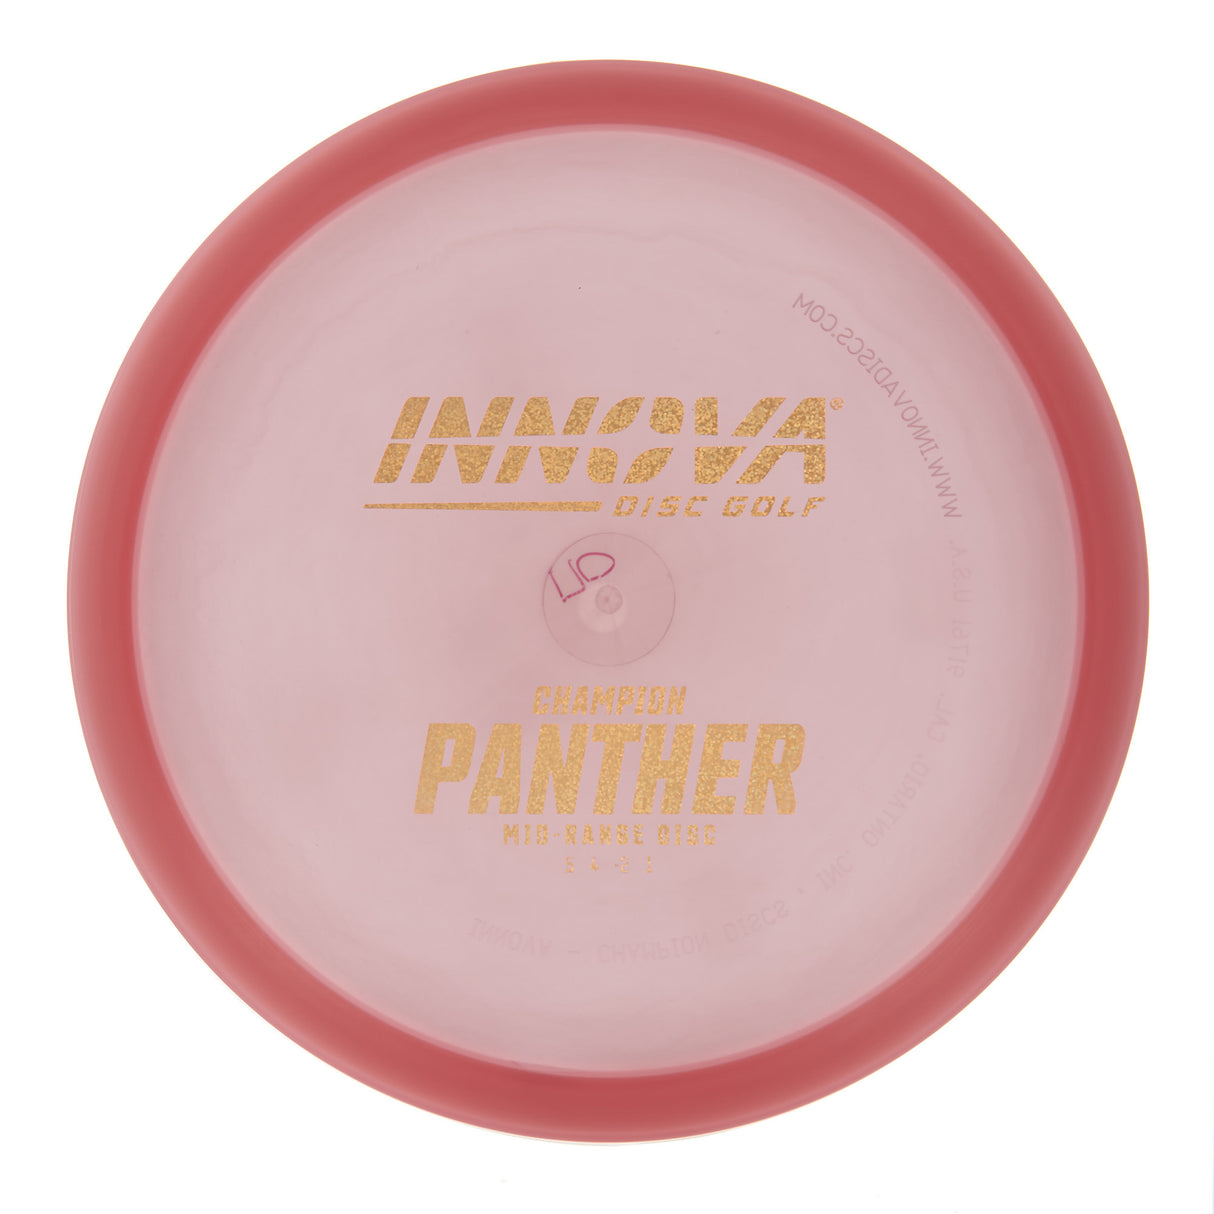 Innova Panther - Champion 170g | Style 0002